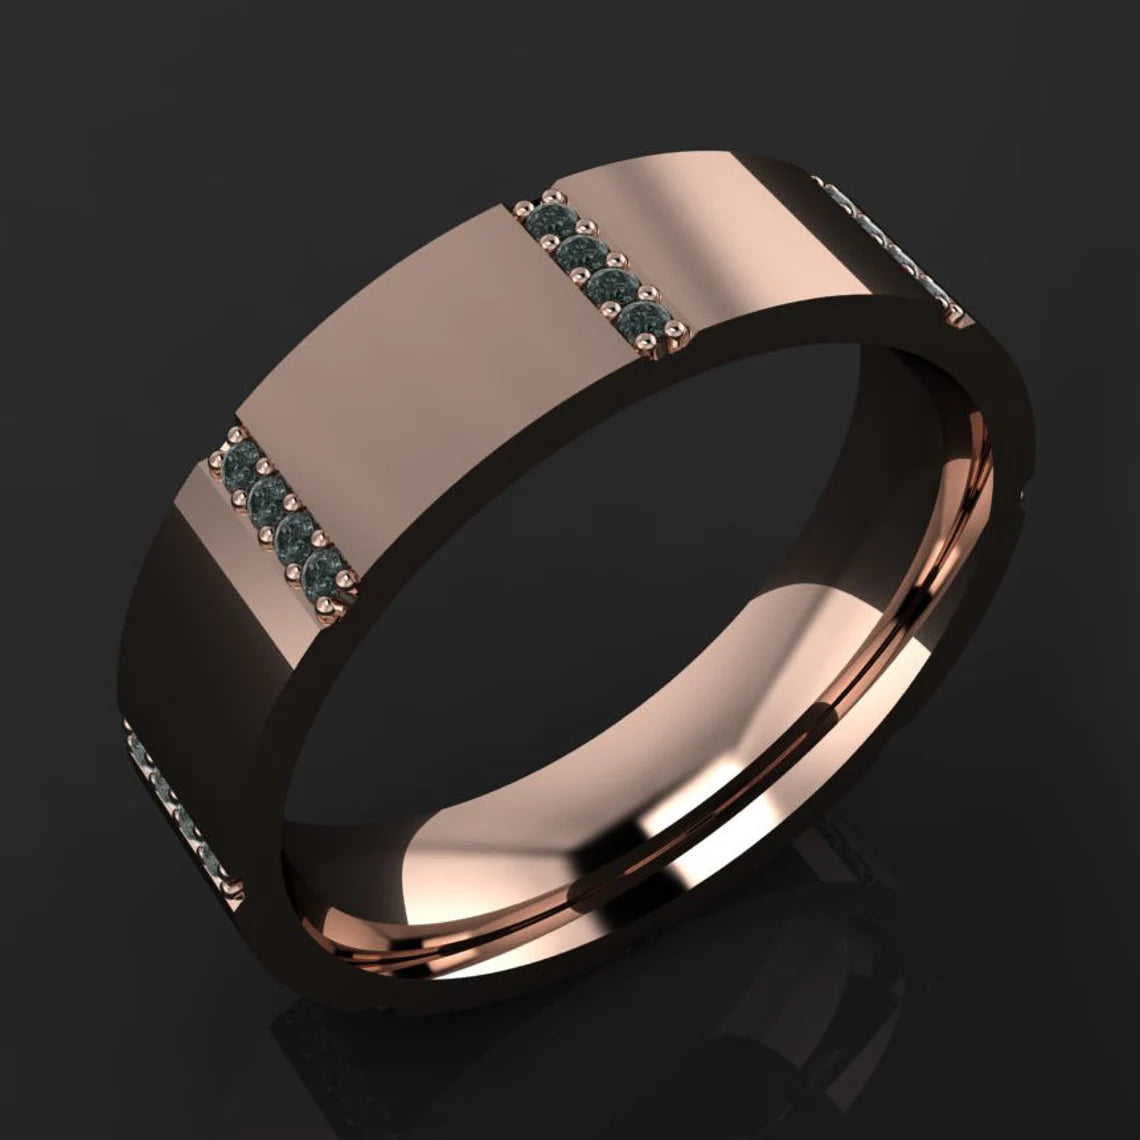 axel ring - men's gold and moissanite wedding band, black moissanite ring - J Hollywood Designs